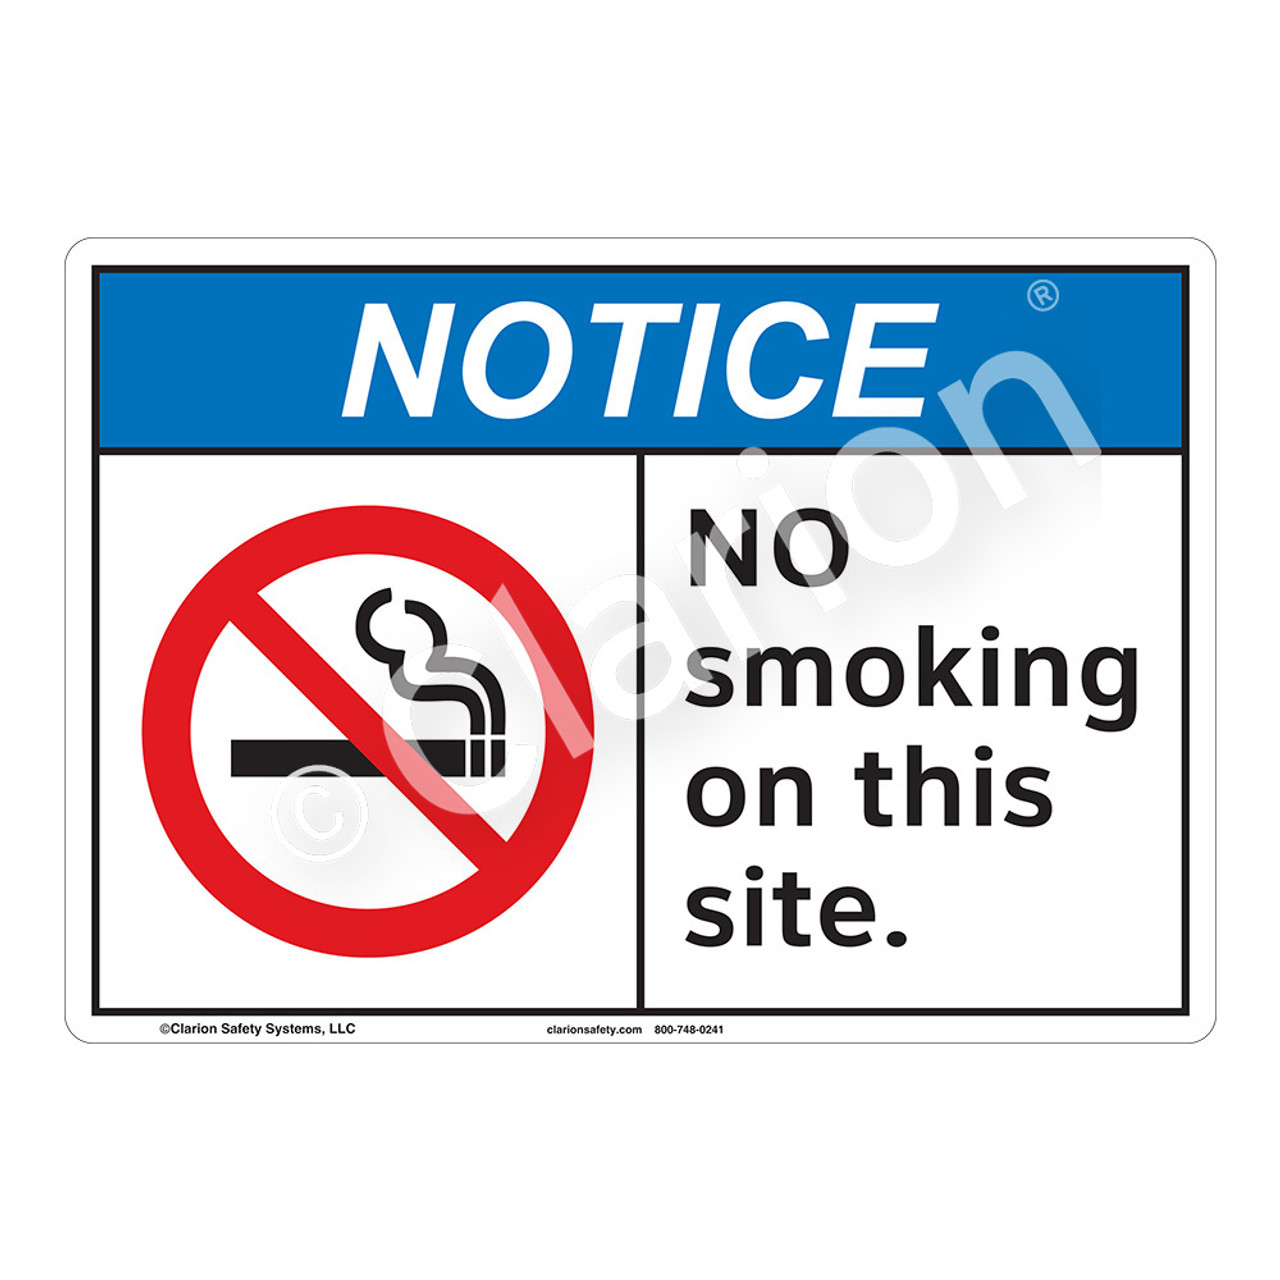 stop smoking symbol